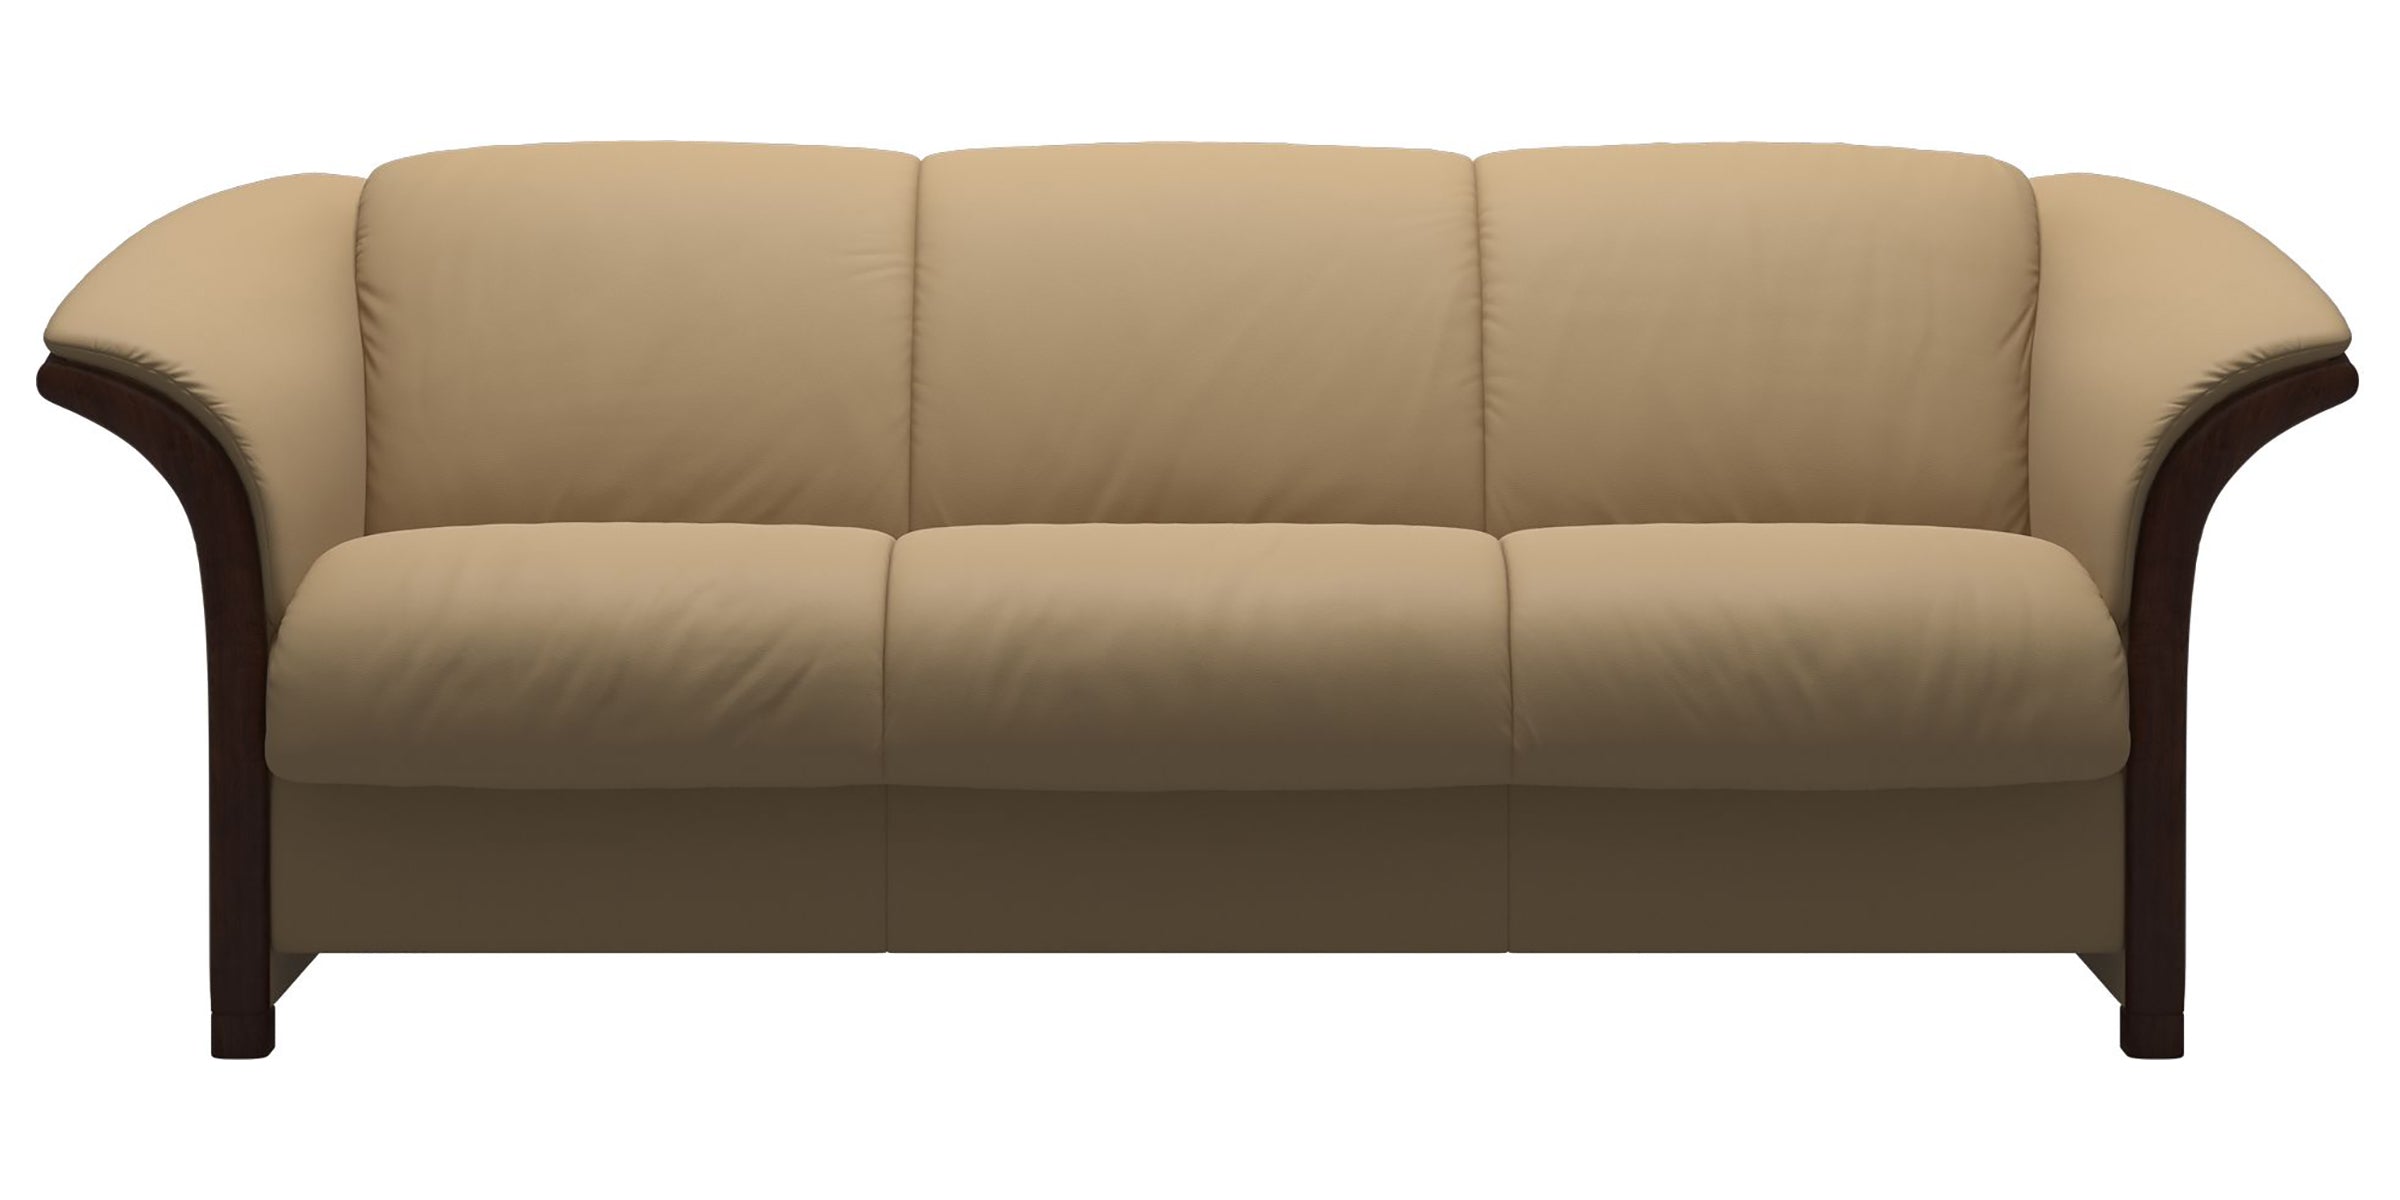 Paloma Leather Sand and Brown Arm Trim | Stressless Manhattan Sofa | Valley Ridge Furniture